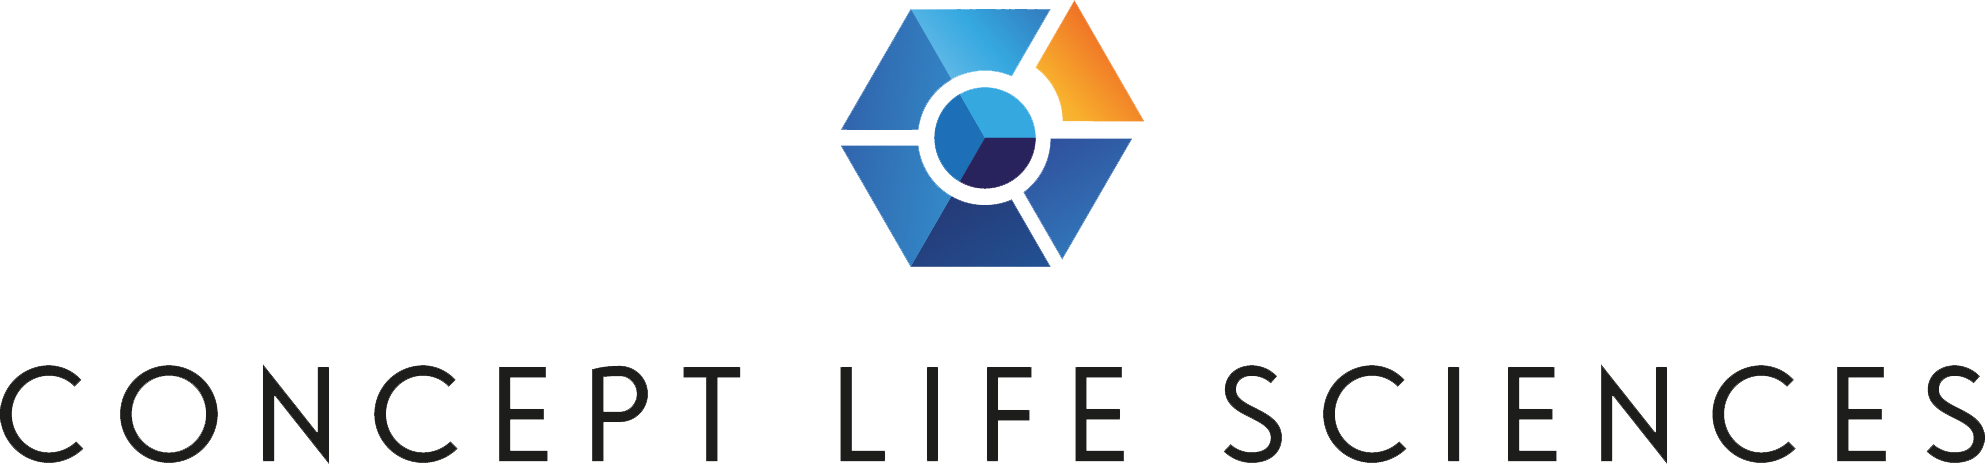 Concept Life Sciences(コンセプトライフサイエンス)